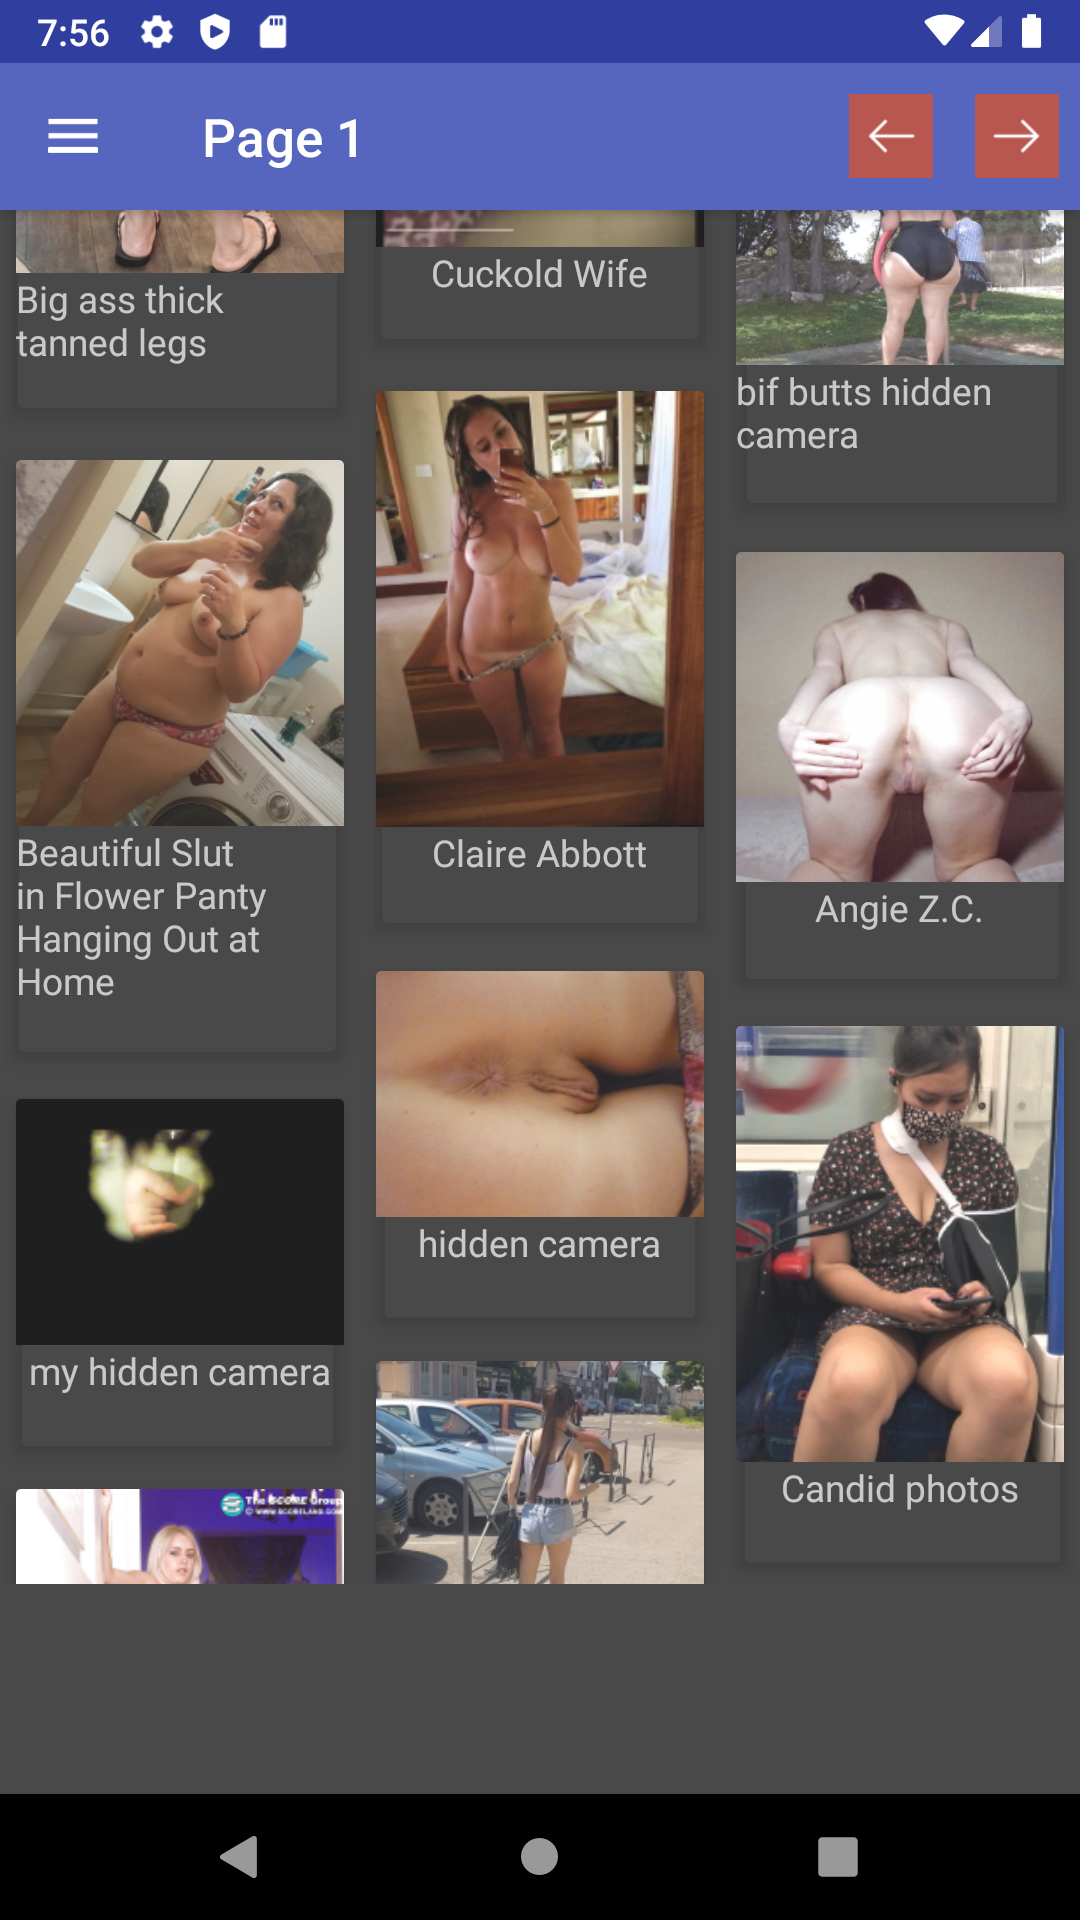 Hidden Camera Porn hentai,daily,pics,hot,erotic,pic,apps,download,pornstar,pornstars,image,sexy,app,galleries,android,viewer,gallery,wallpaper,porn,photo,application,apk,hentei